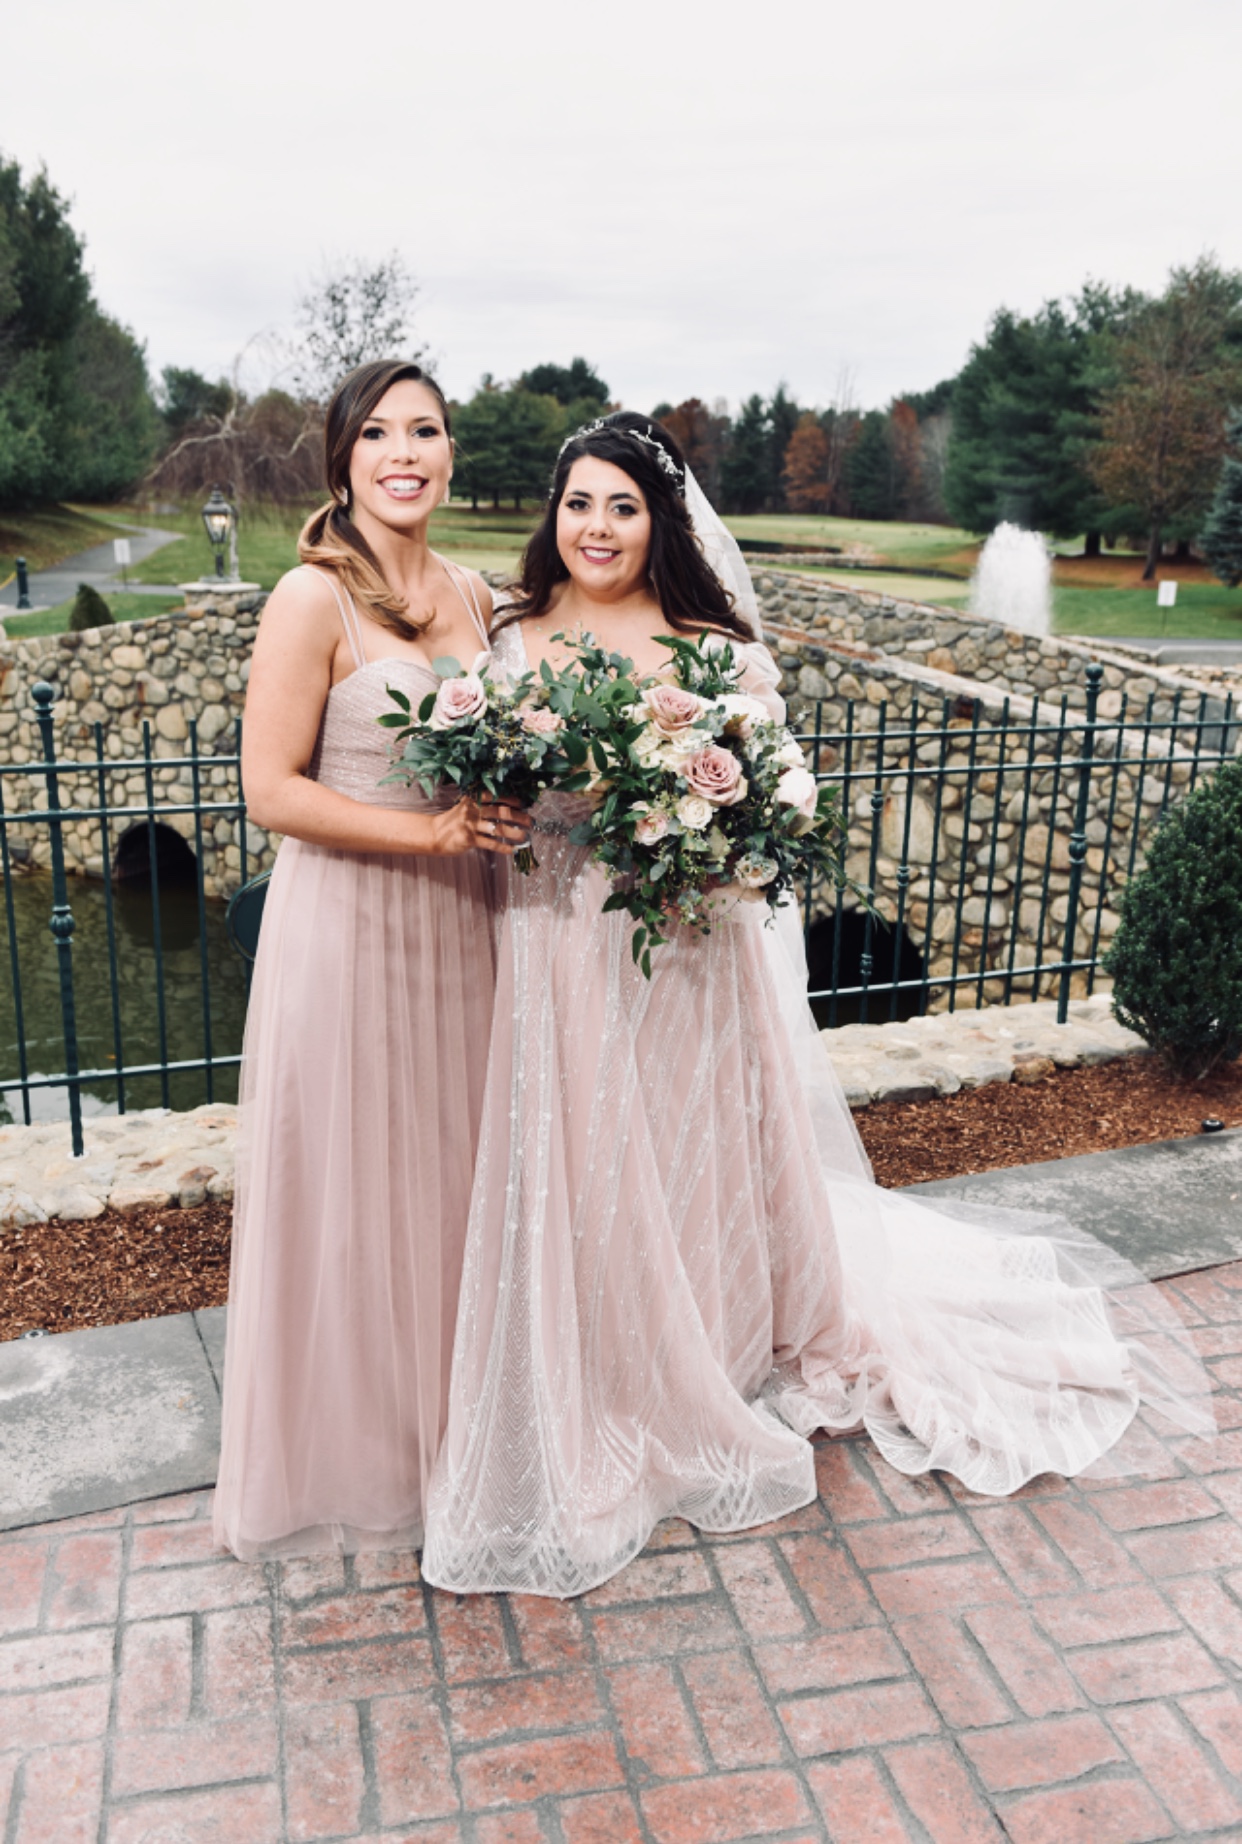 REAL WEDDING | Romantic Secret Garden Meets Rustic Lodge in Massachusetts | Keith Berry | Pretty Pear Bride